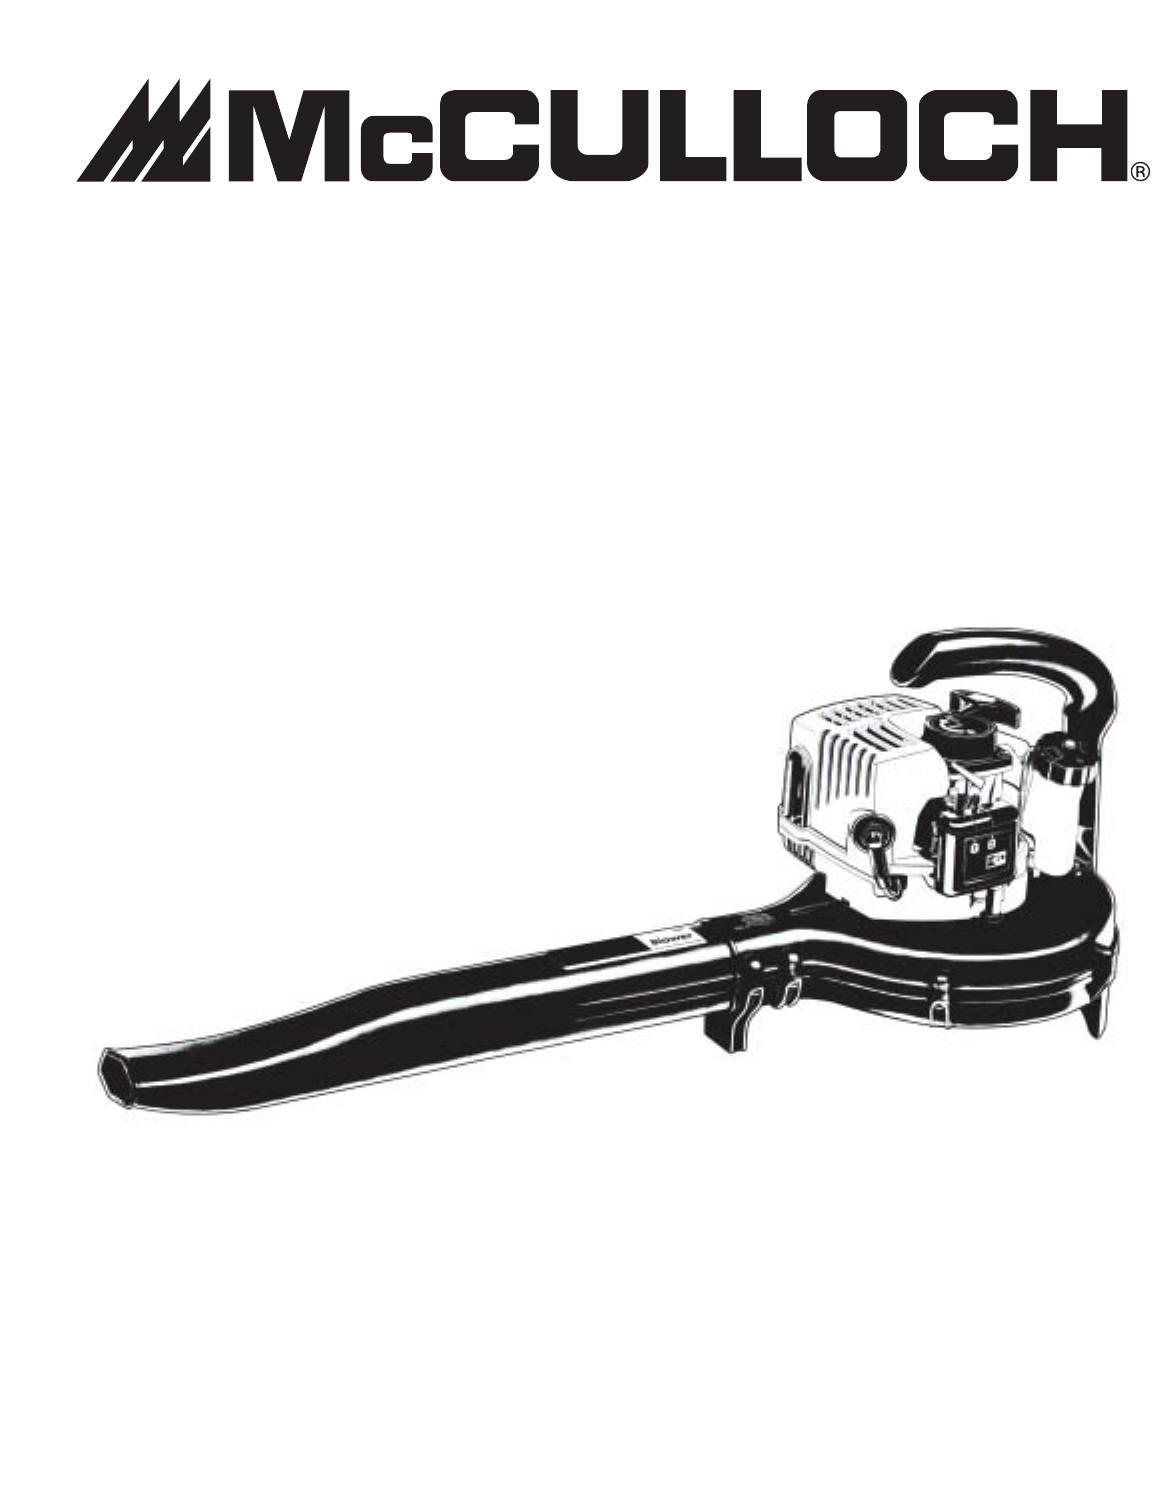 Mcculloch mb290 leaf blower manual